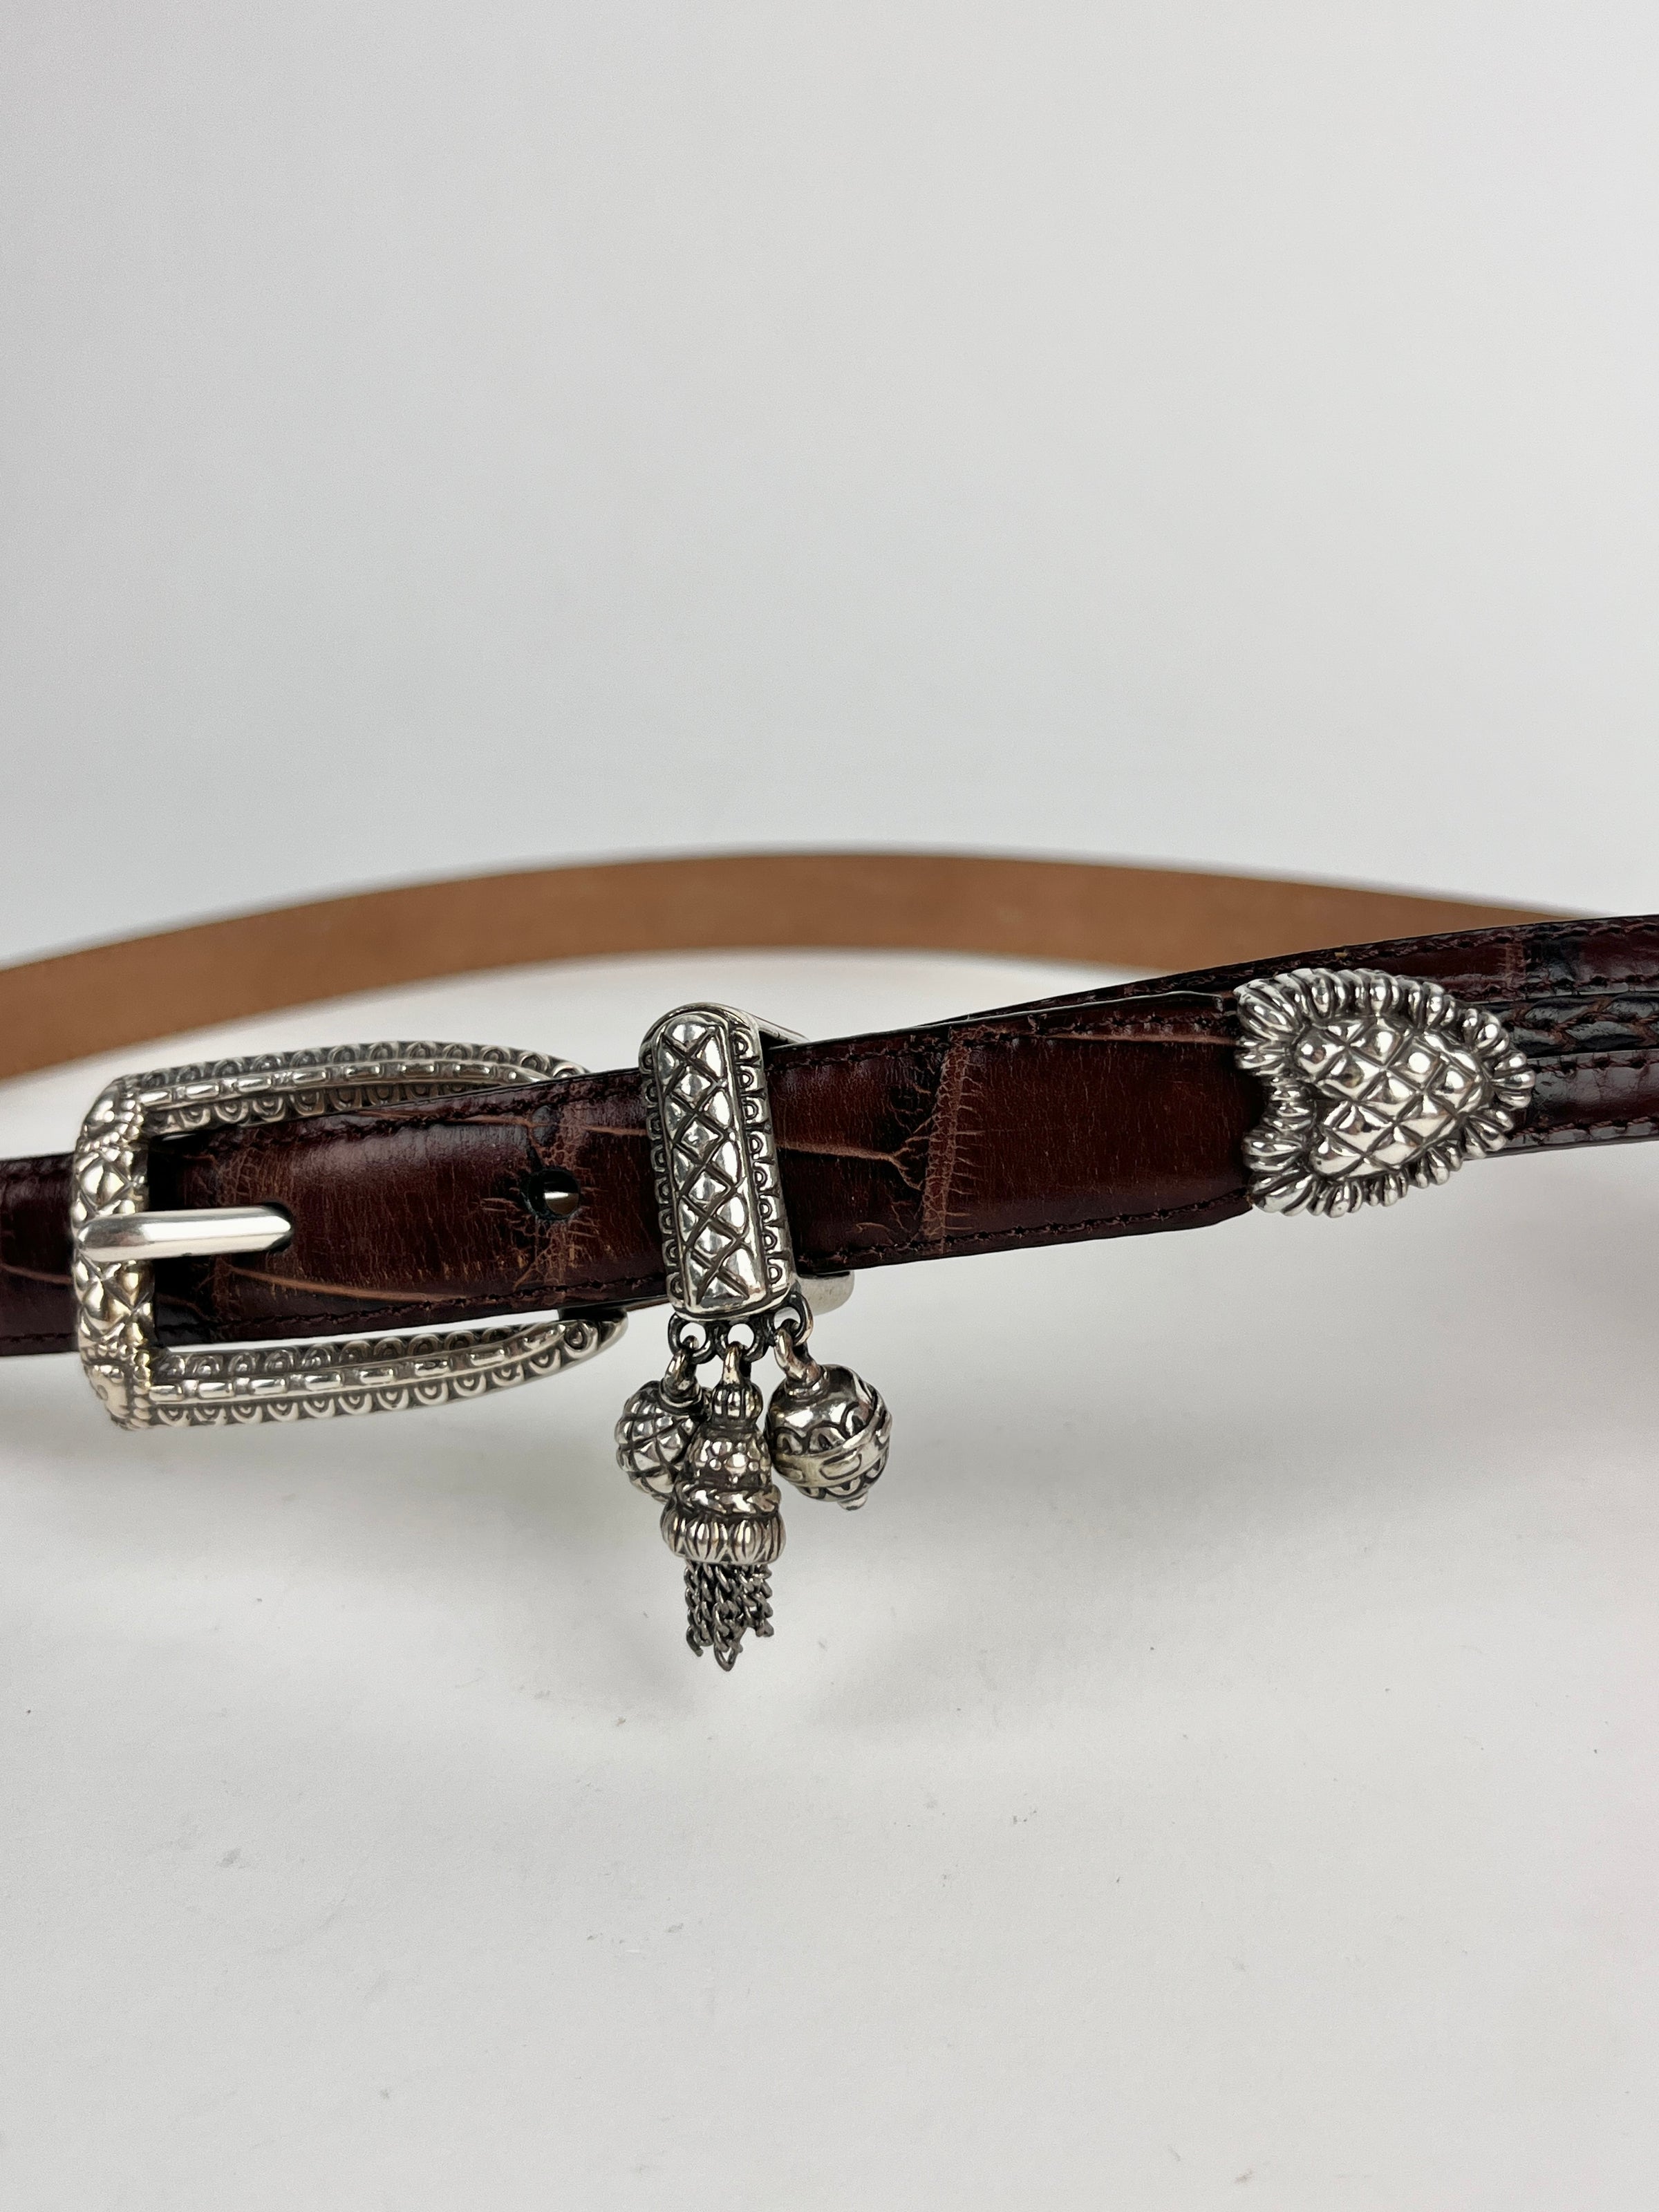 Vintage Brighton Braided Leather Belt With Ornate Metalwork Buckle -   Canada